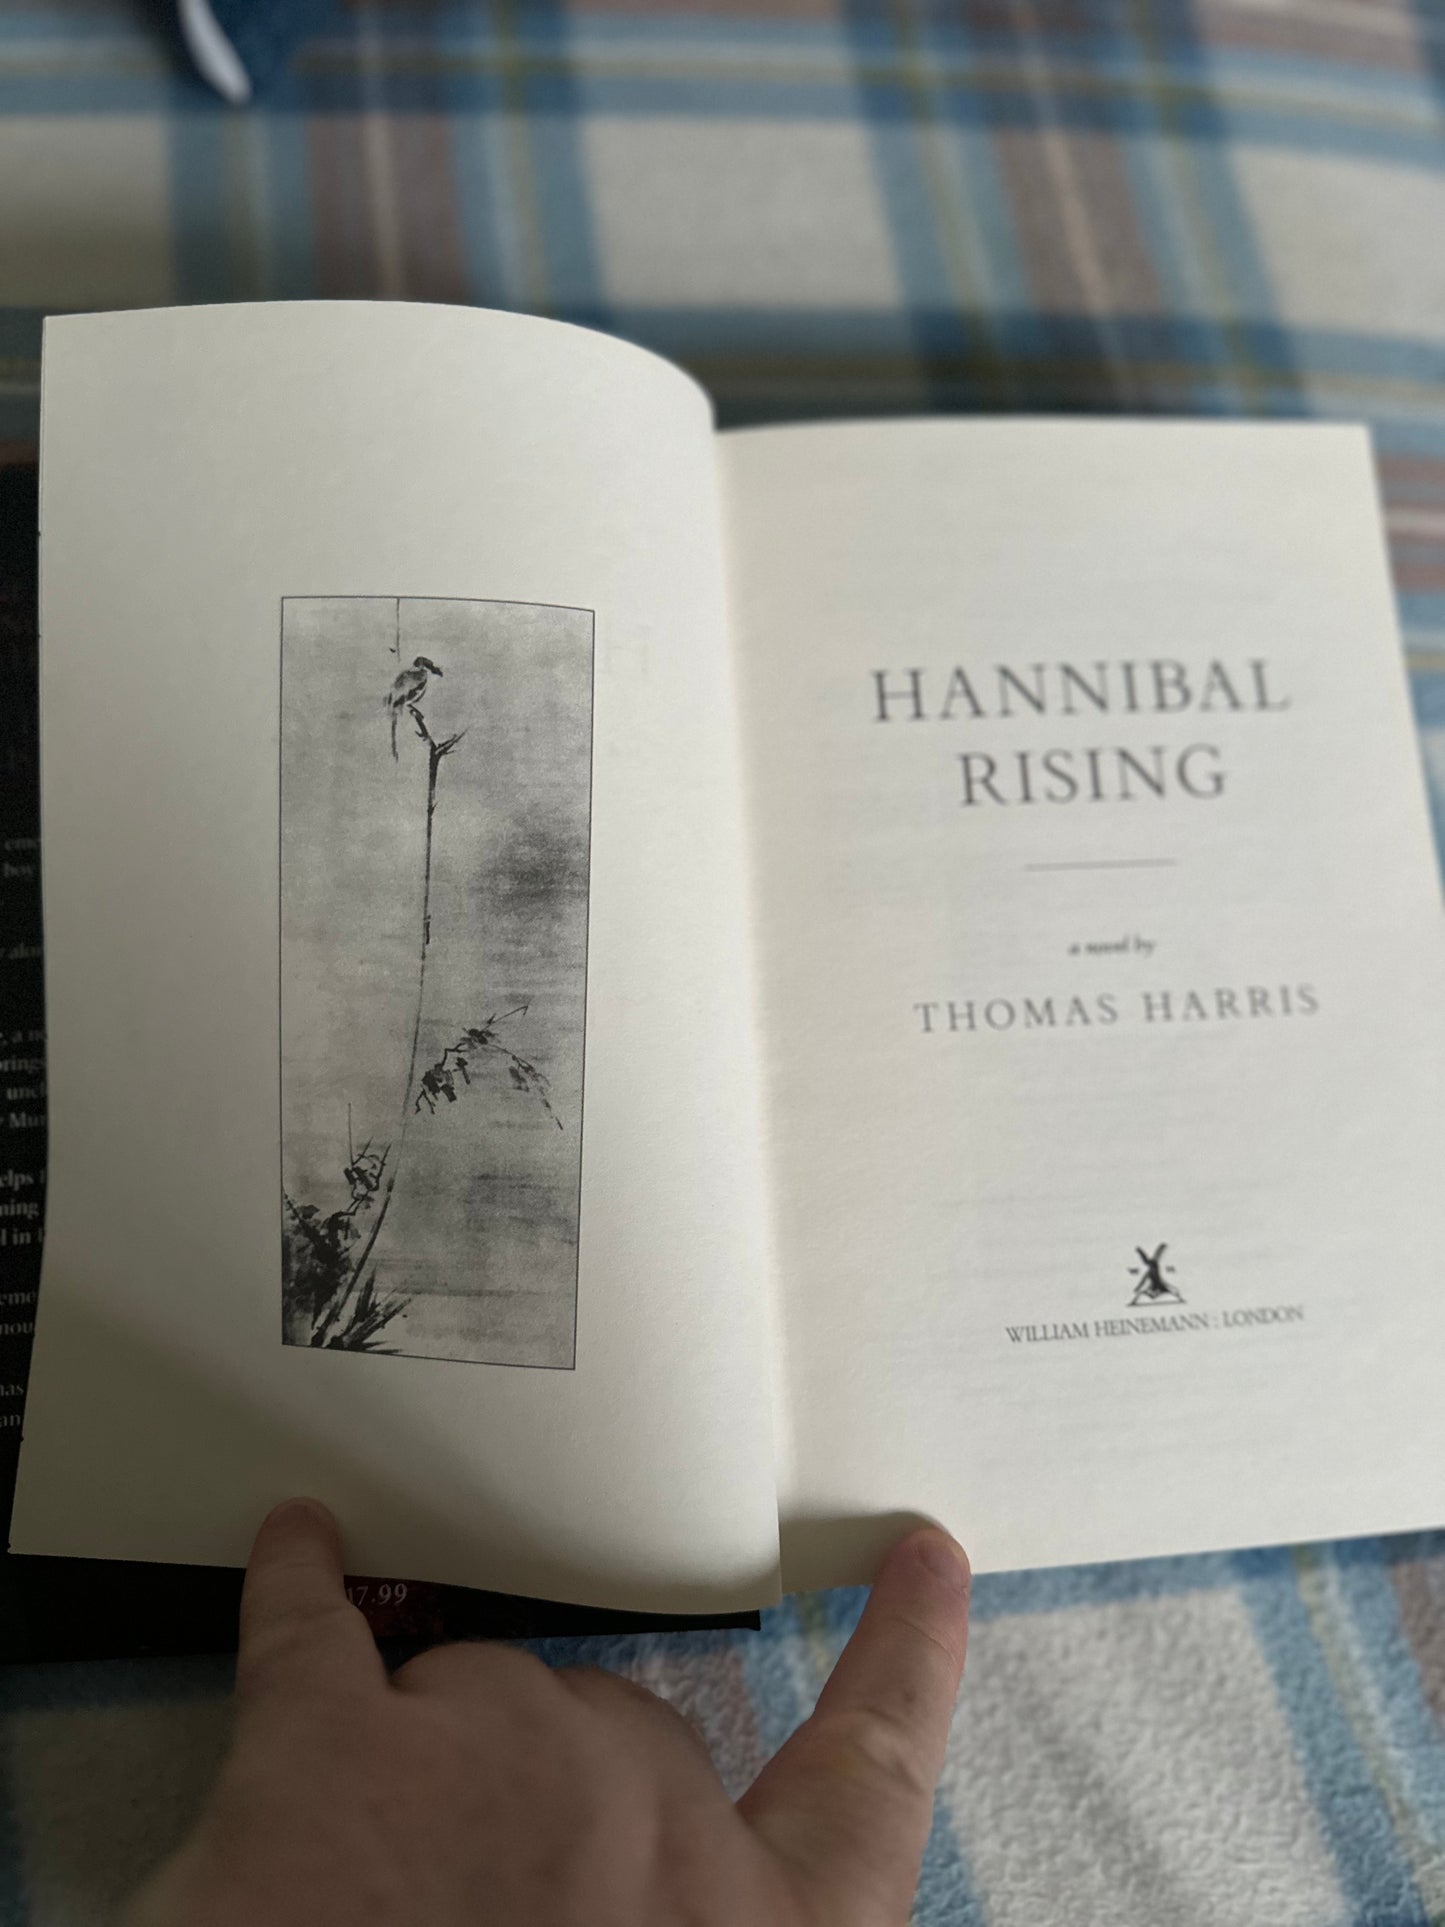 2006*1st* Hannibal Rising - Thomas Harris(William Heinemann)